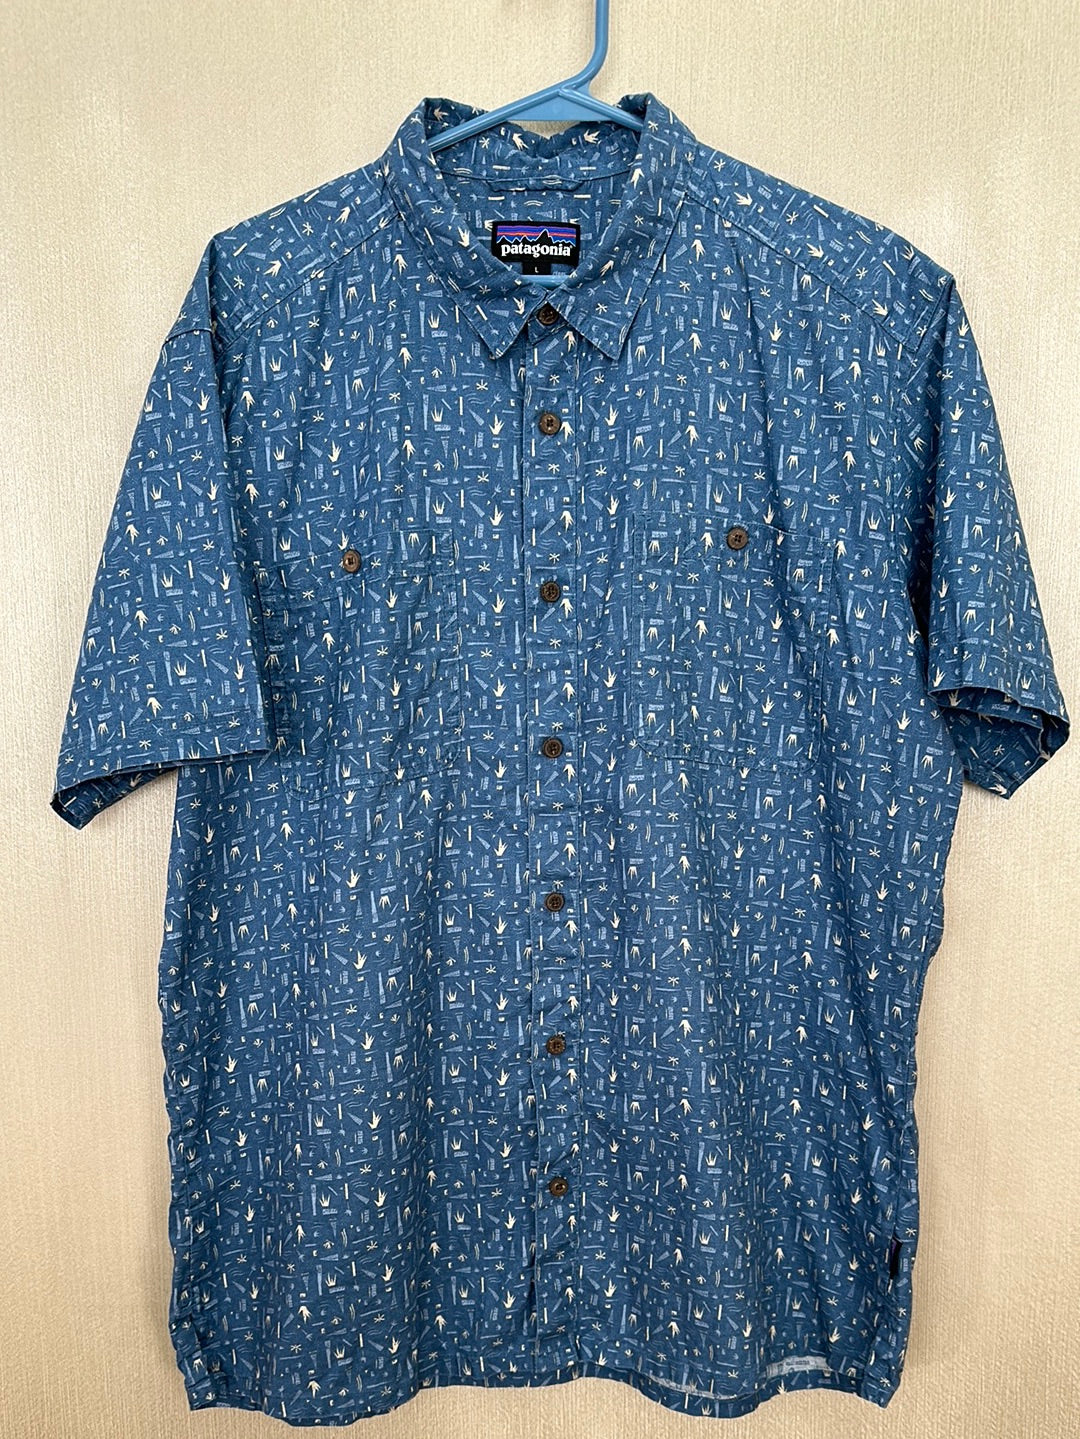 PATAGONIA blue print Hemp Organic Cotton Button Up Short Sleeve Shirt - L